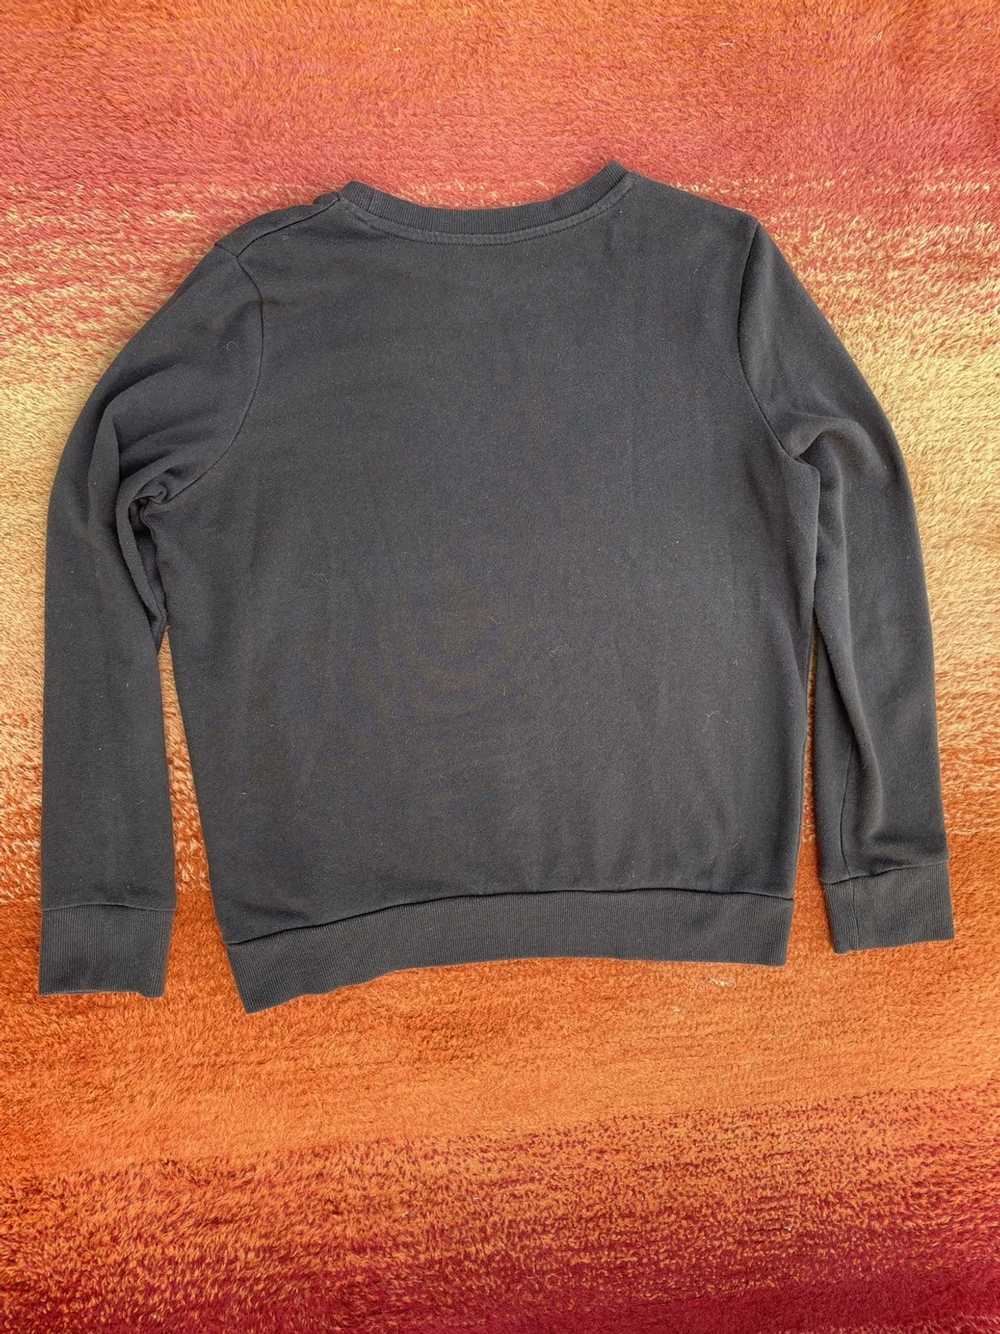 Grateful Dead × Vintage Grateful Dead Sweater - image 4